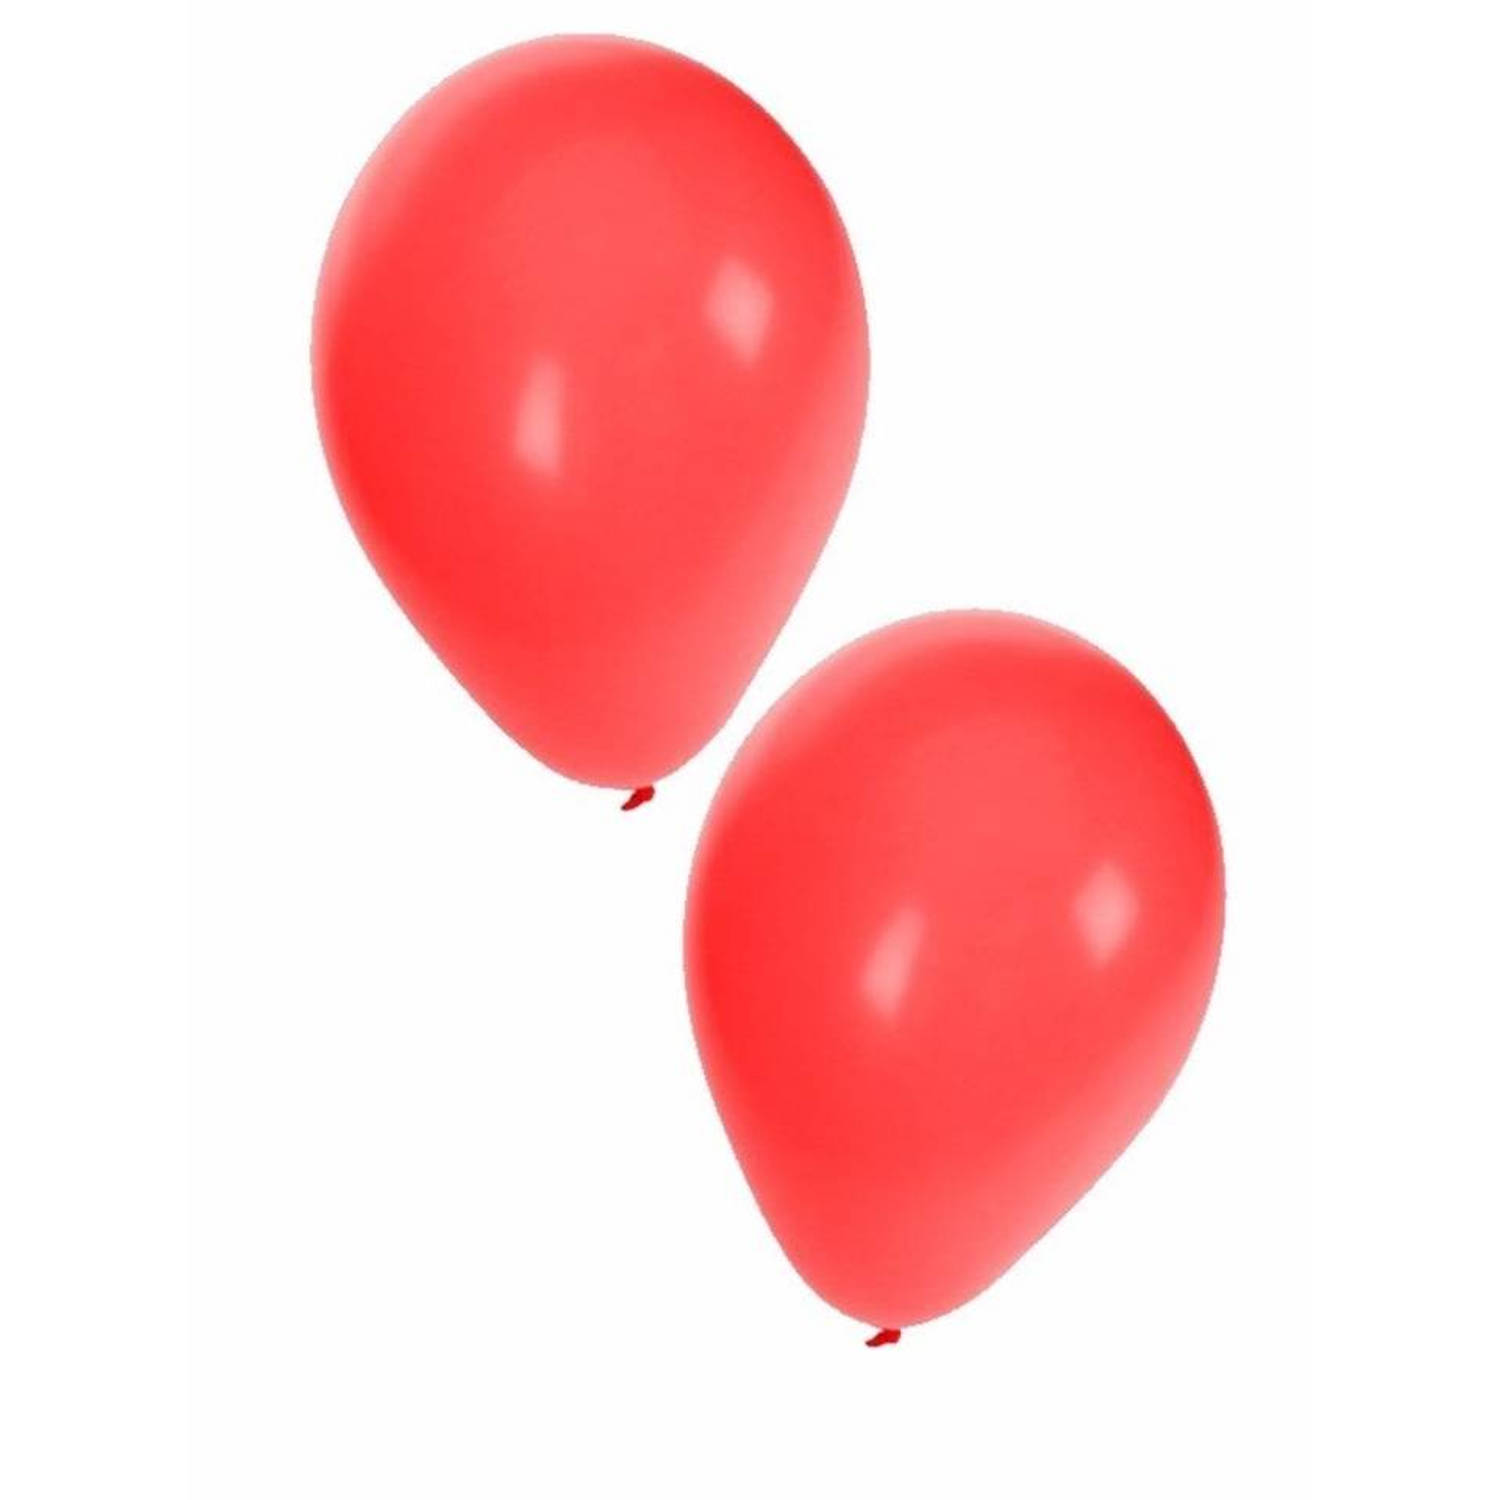 Mentaliteit Druipend Erfgenaam Rode ballonnen 15x stuks - Ballonnen | Blokker